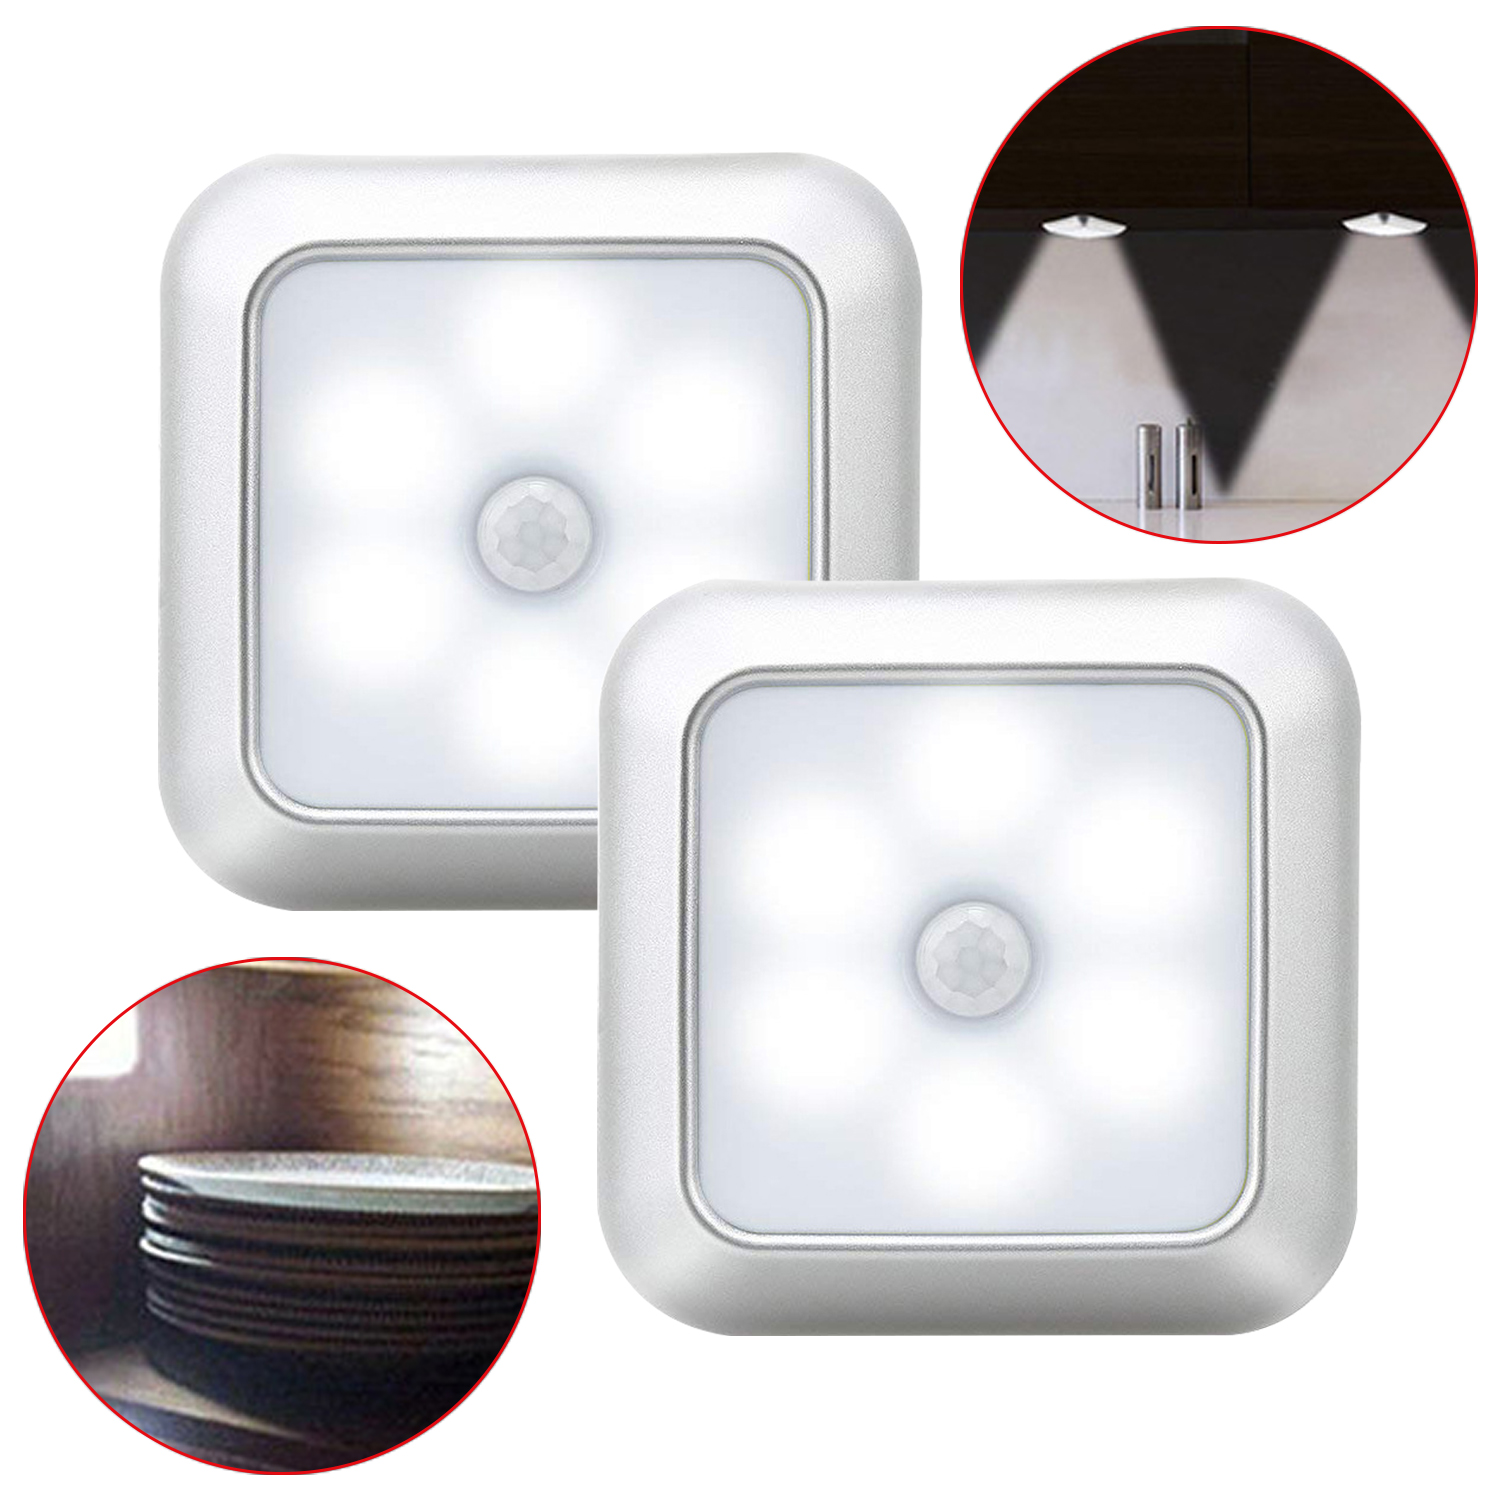 Battery Powered LED Motion Sensor Night Light Wireless Lighting Stairs Light Bedroom Wall Lamp For Cupboard Toilet Wardrobe Home